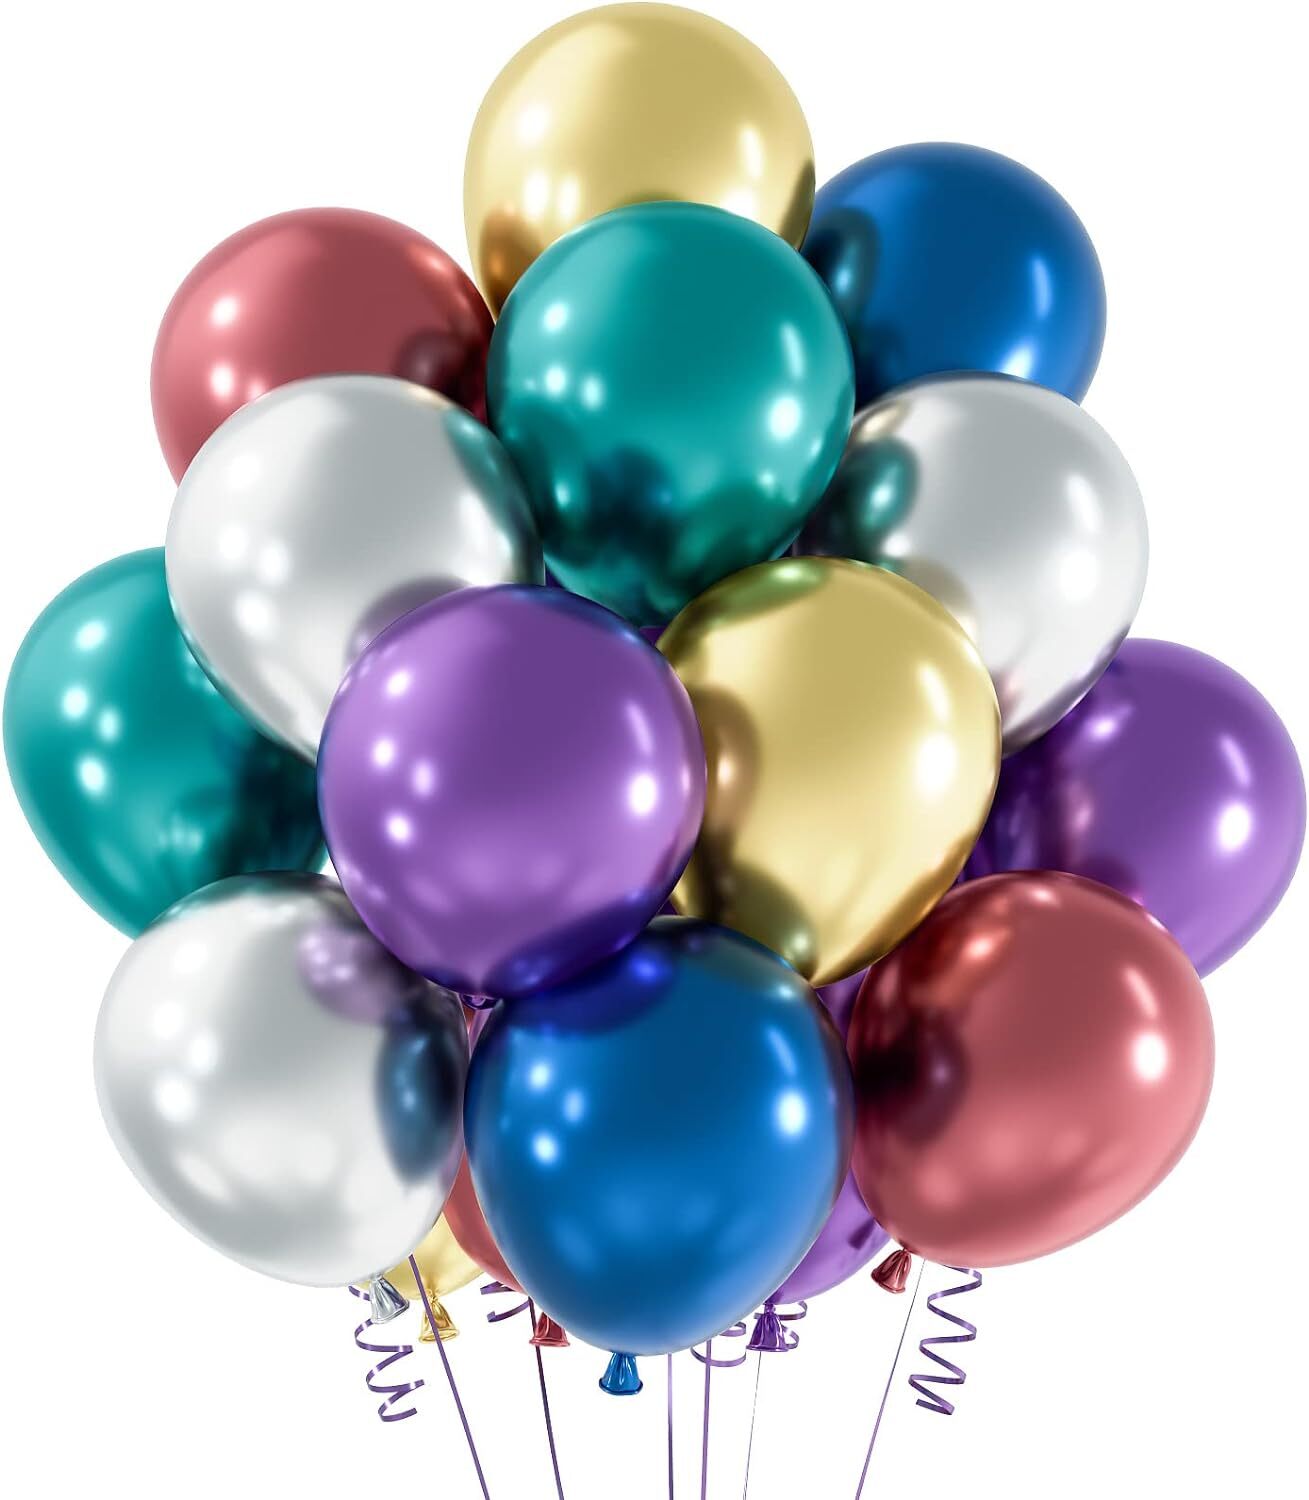 50 PCS Colourful Chrome Metallic Latex Balloons Party Decorations